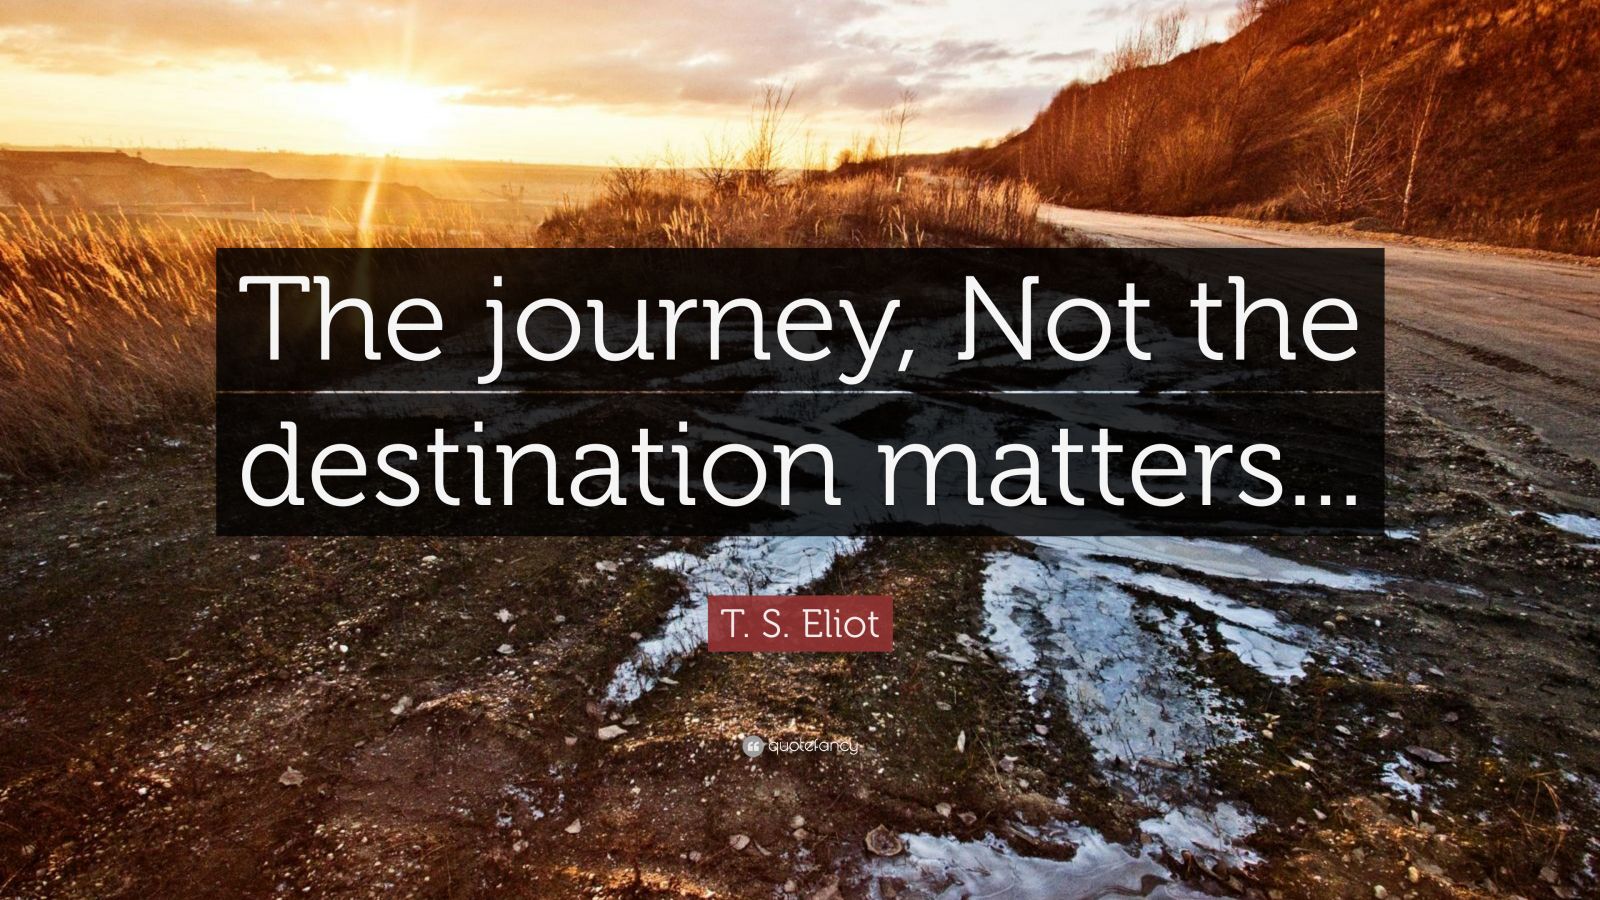 T S Eliot Quote “the Journey Not The Destination Matters” 12